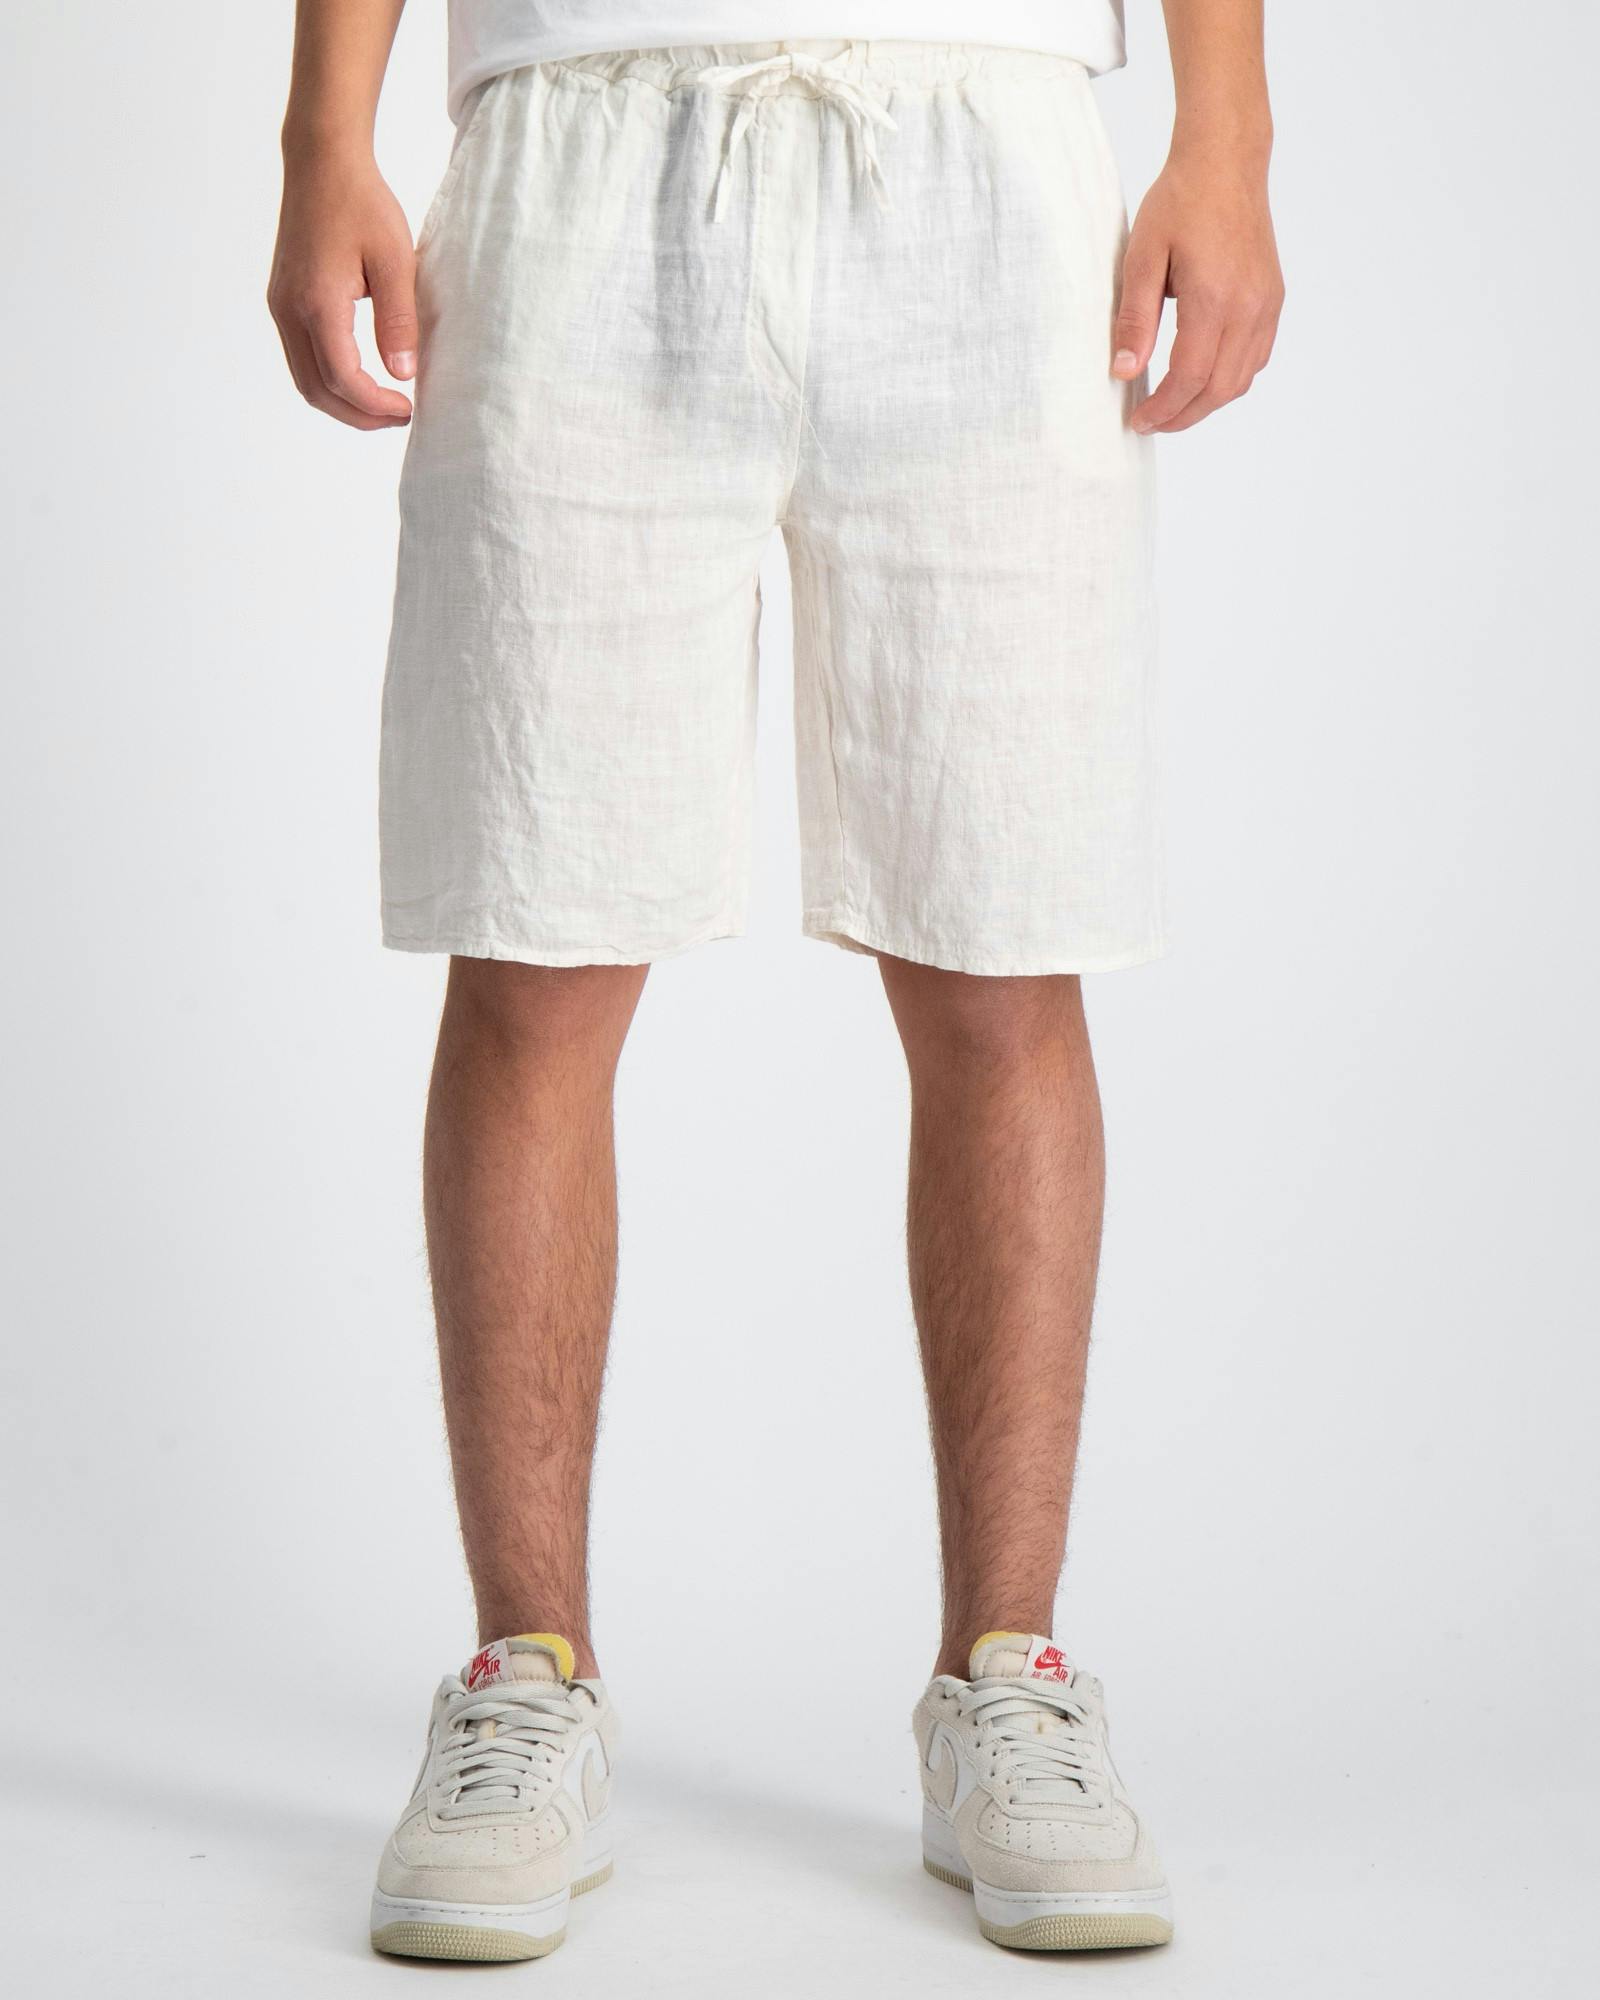 The Linen Shorts